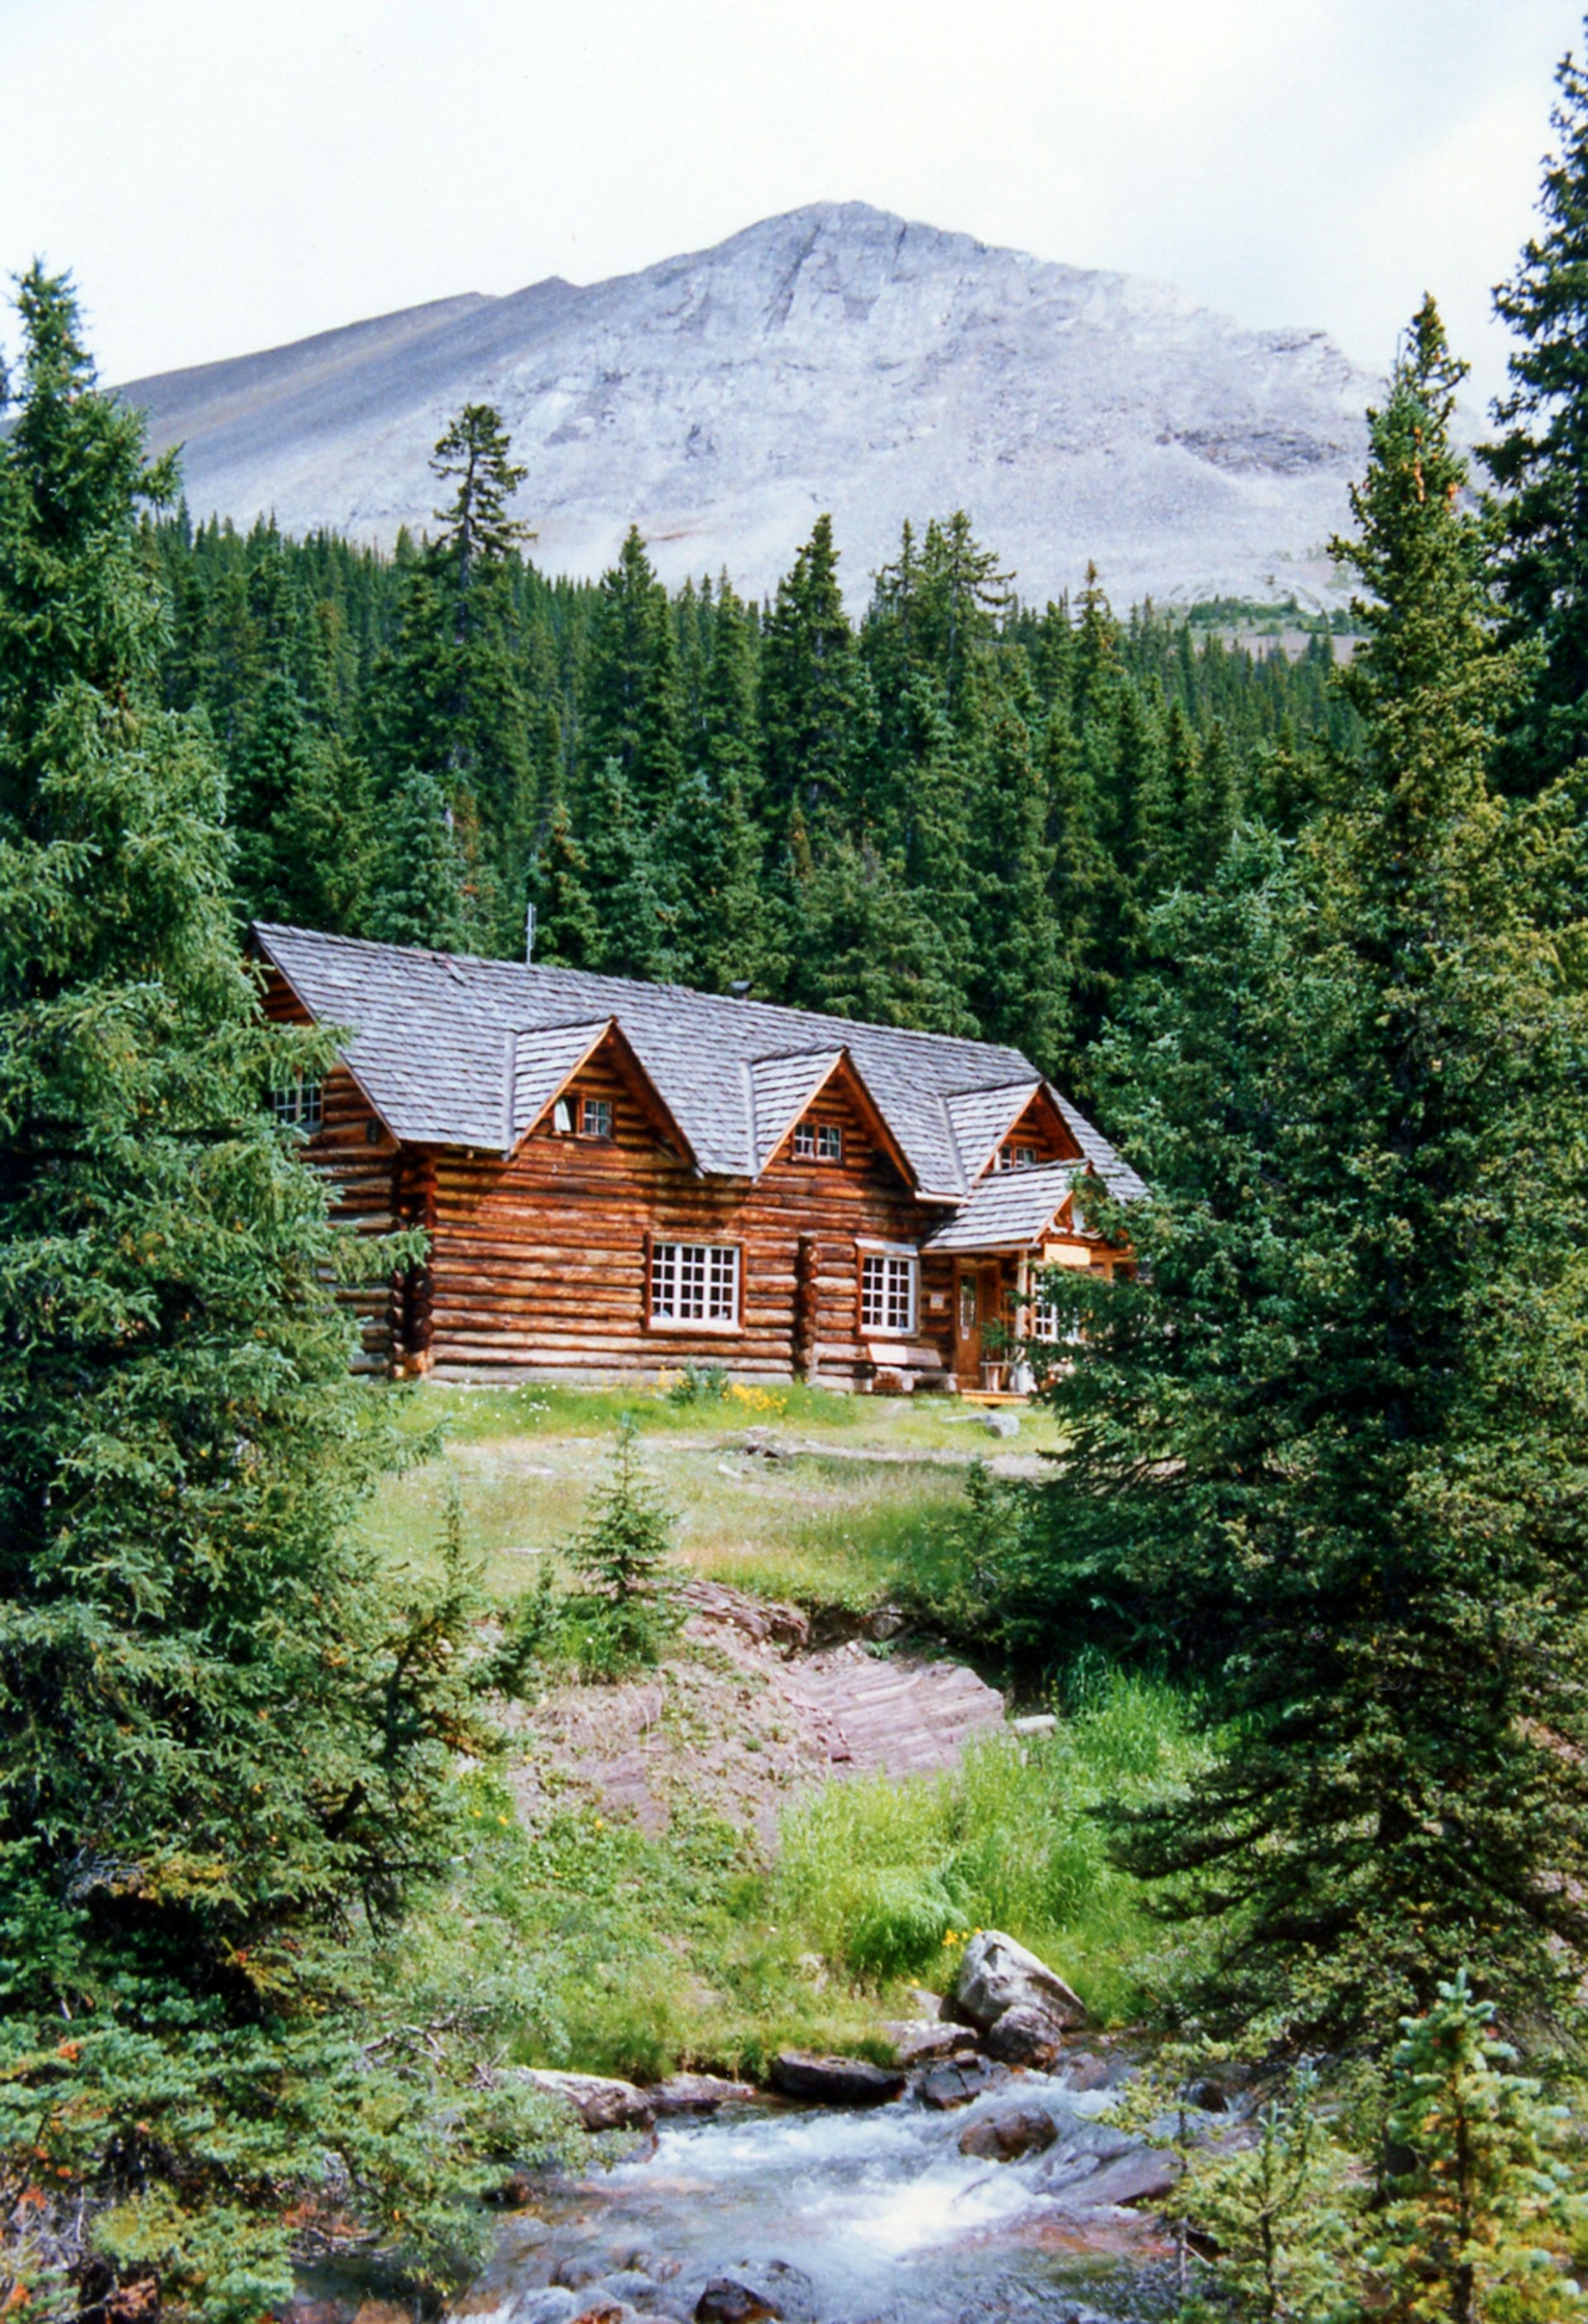 Skoki Lodge, about 20 miles east of Lake Louise, Banff National Park